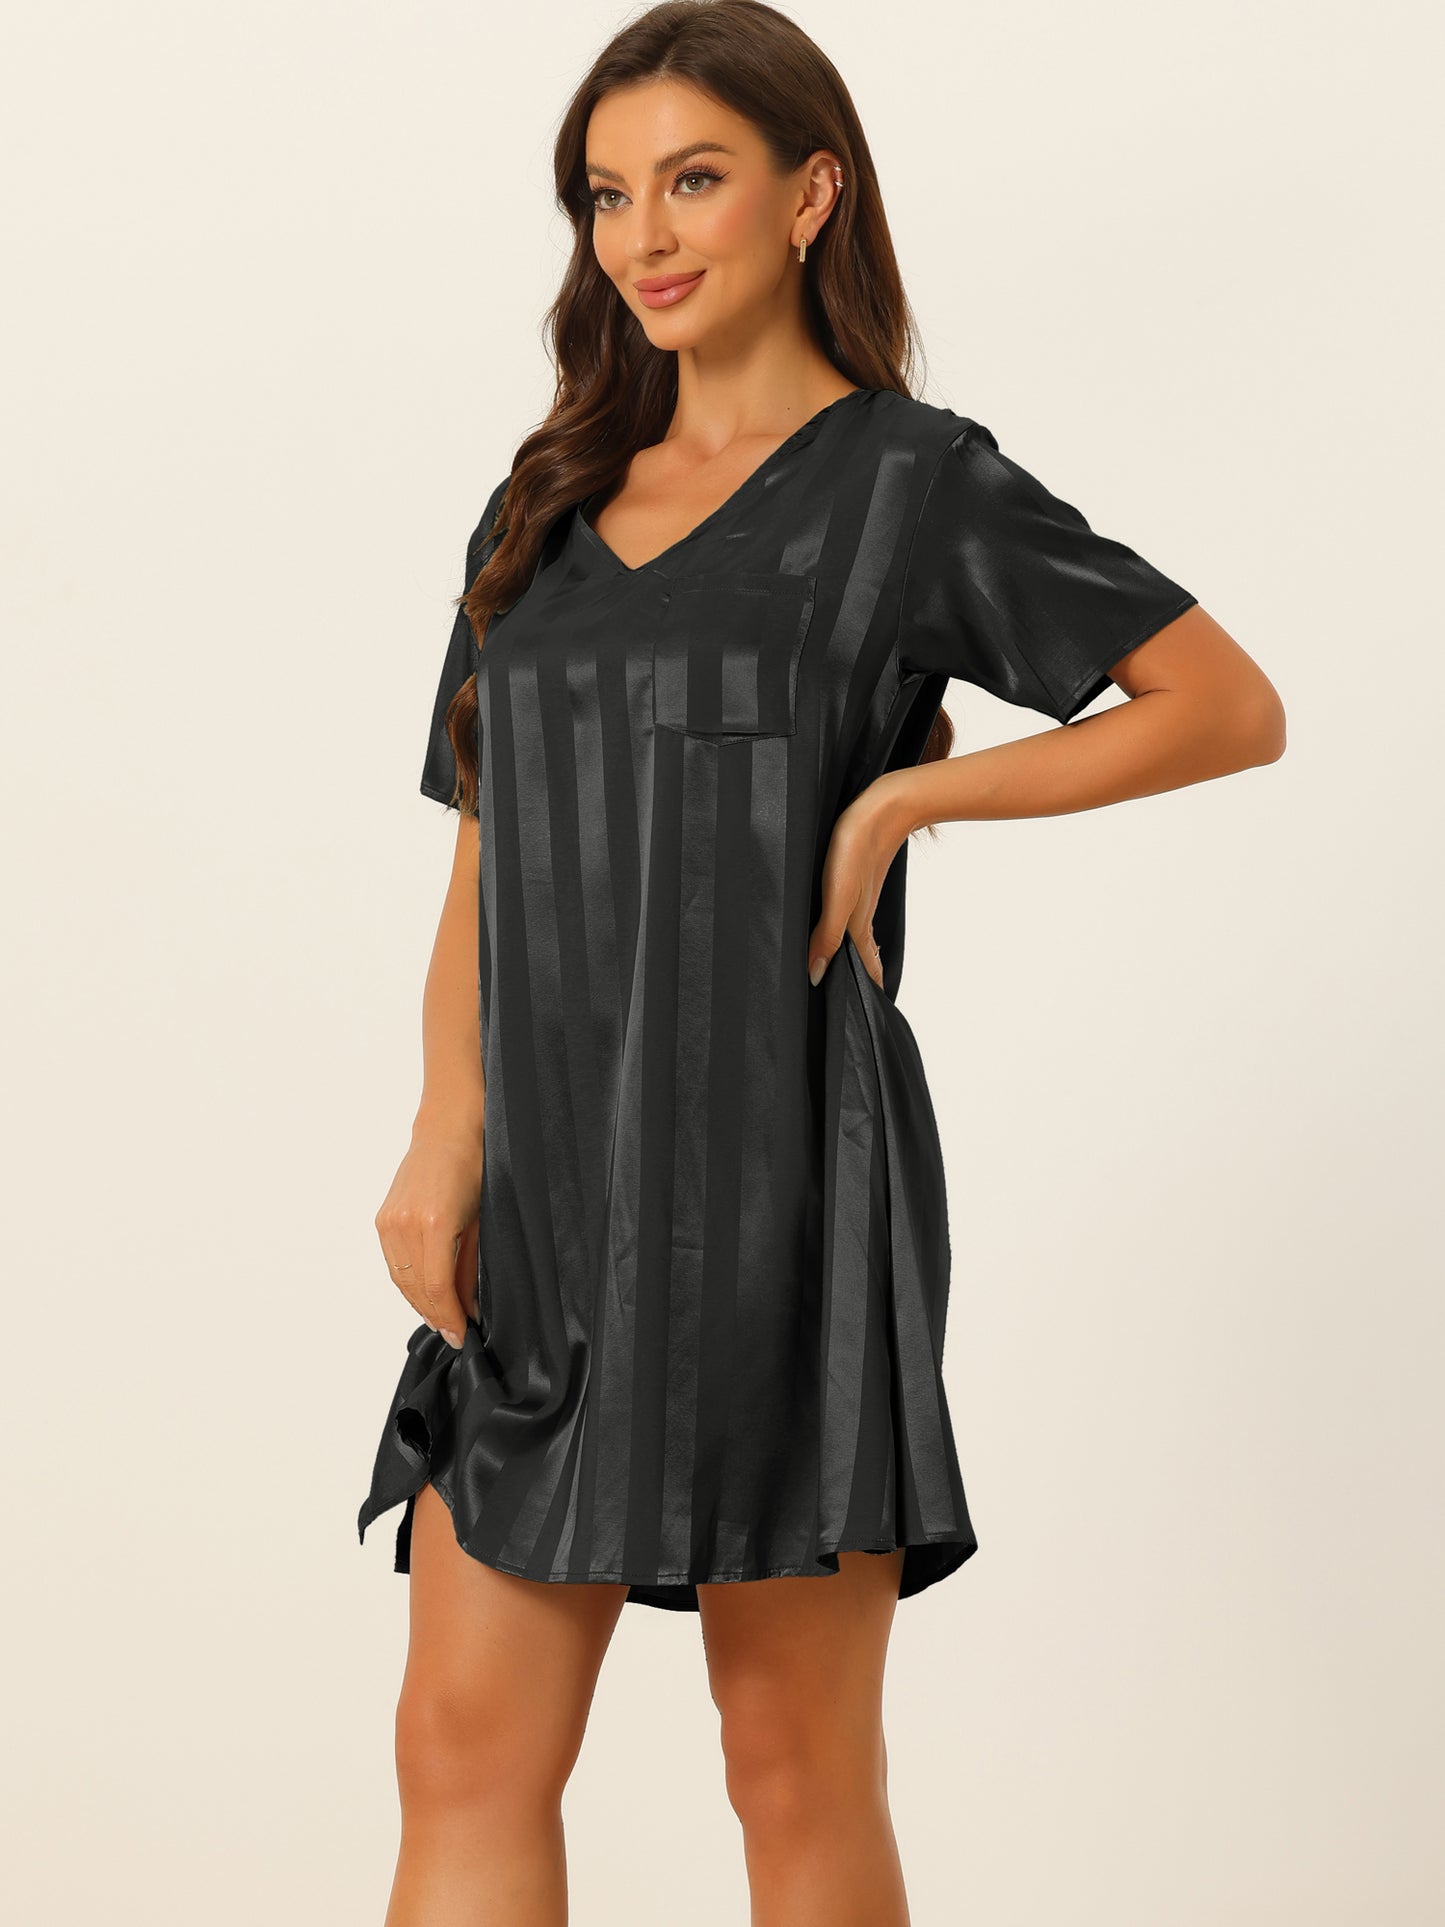 cheibear Pajamas Satin Dress Nightshirt Short Sleeves Lounge Sleepwear Nightgown Black